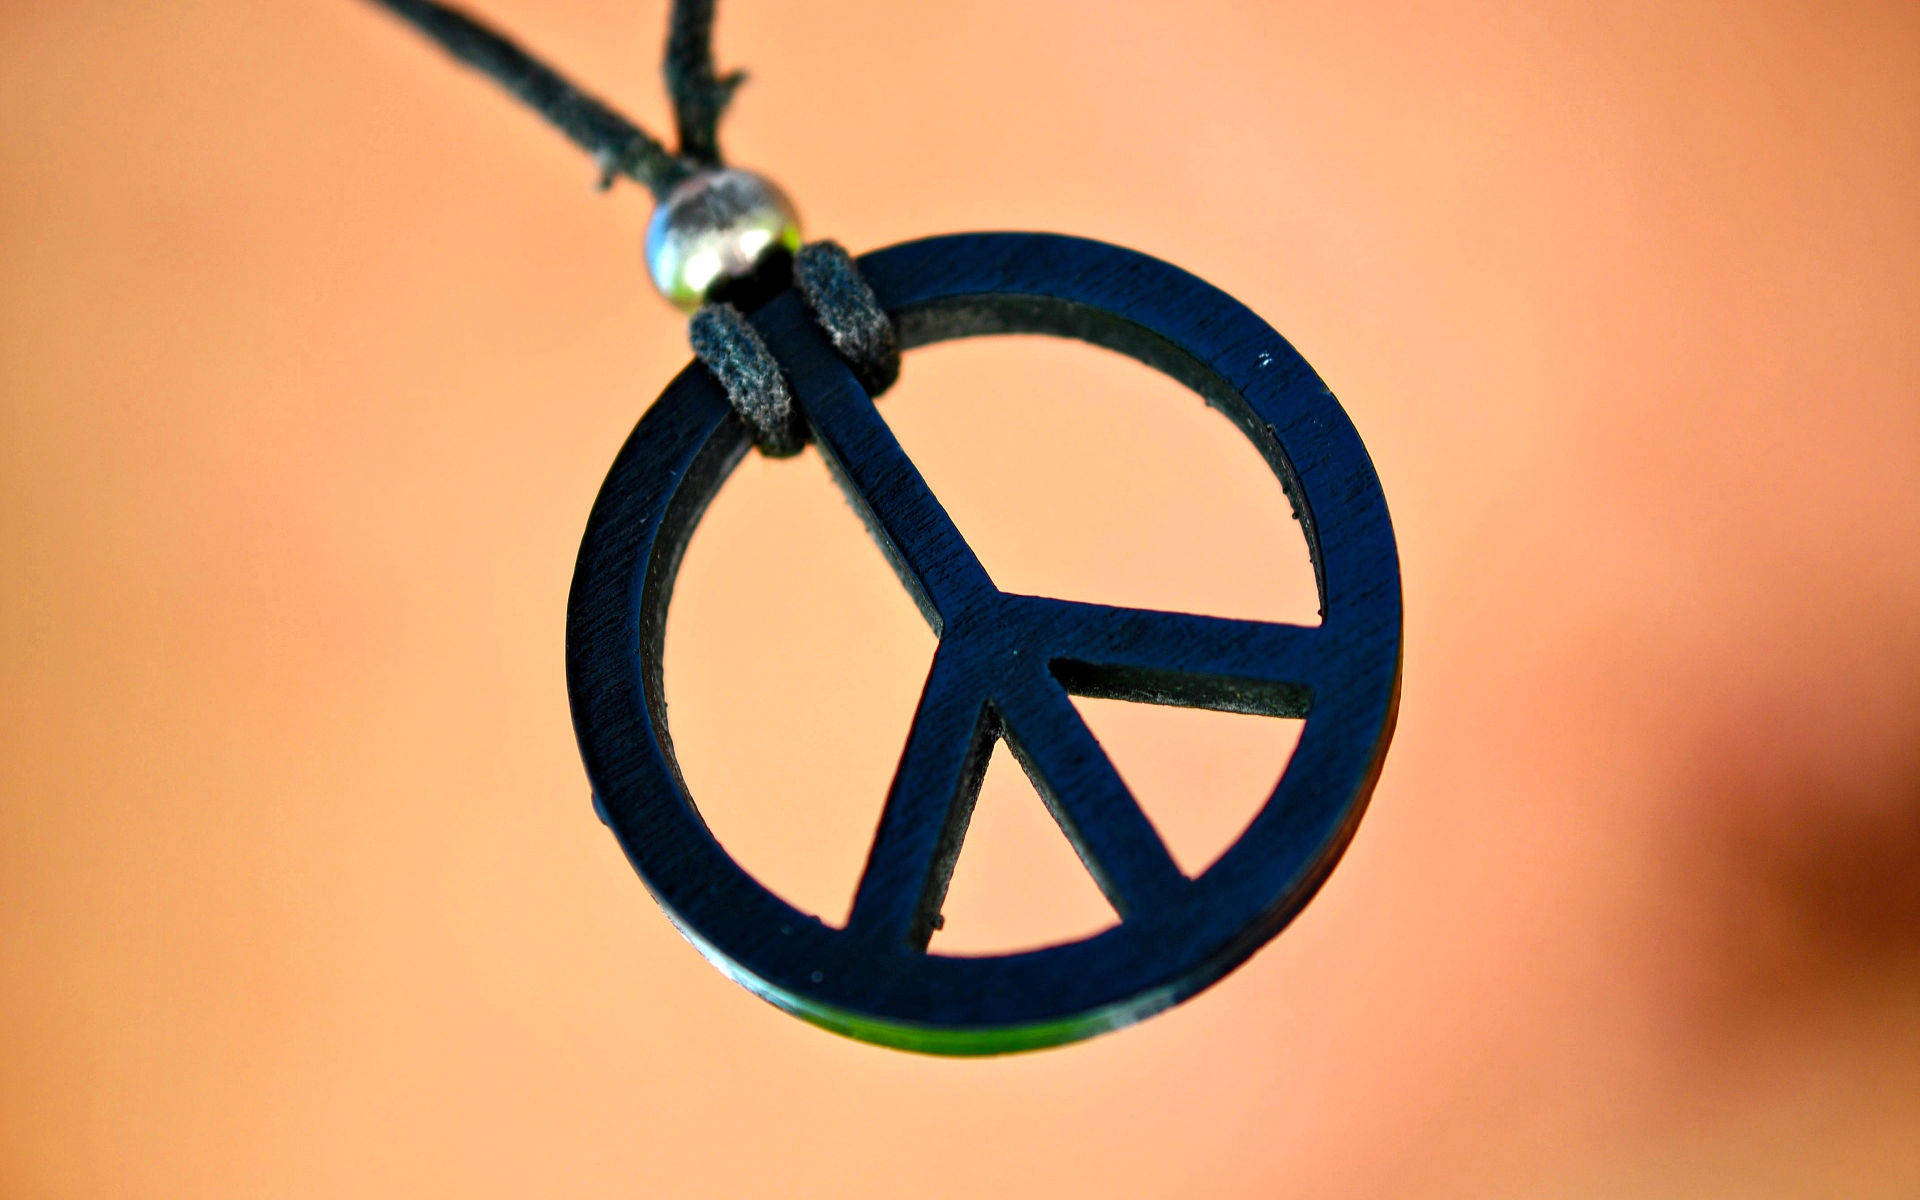 peace sign desktop wallpaper